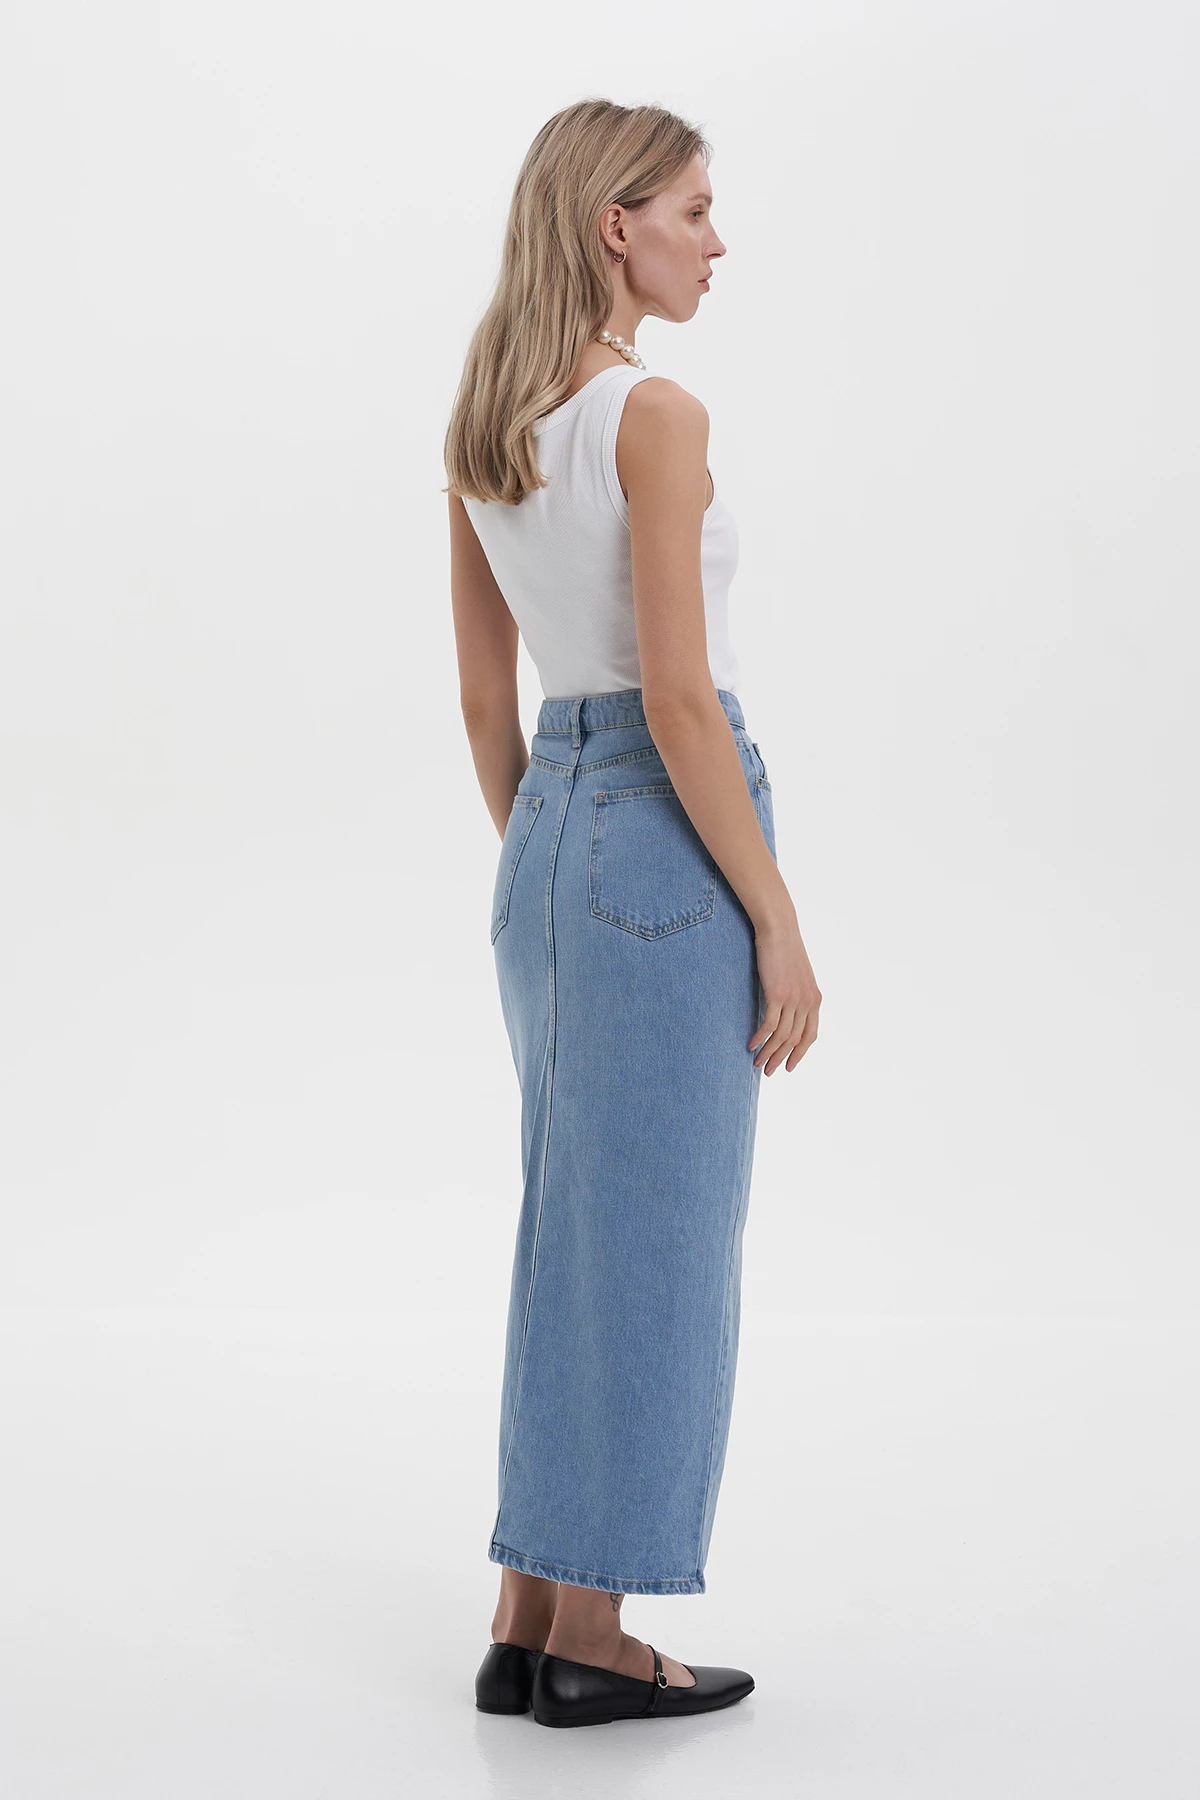 Blue denim midi skirt with front slit, photo 2